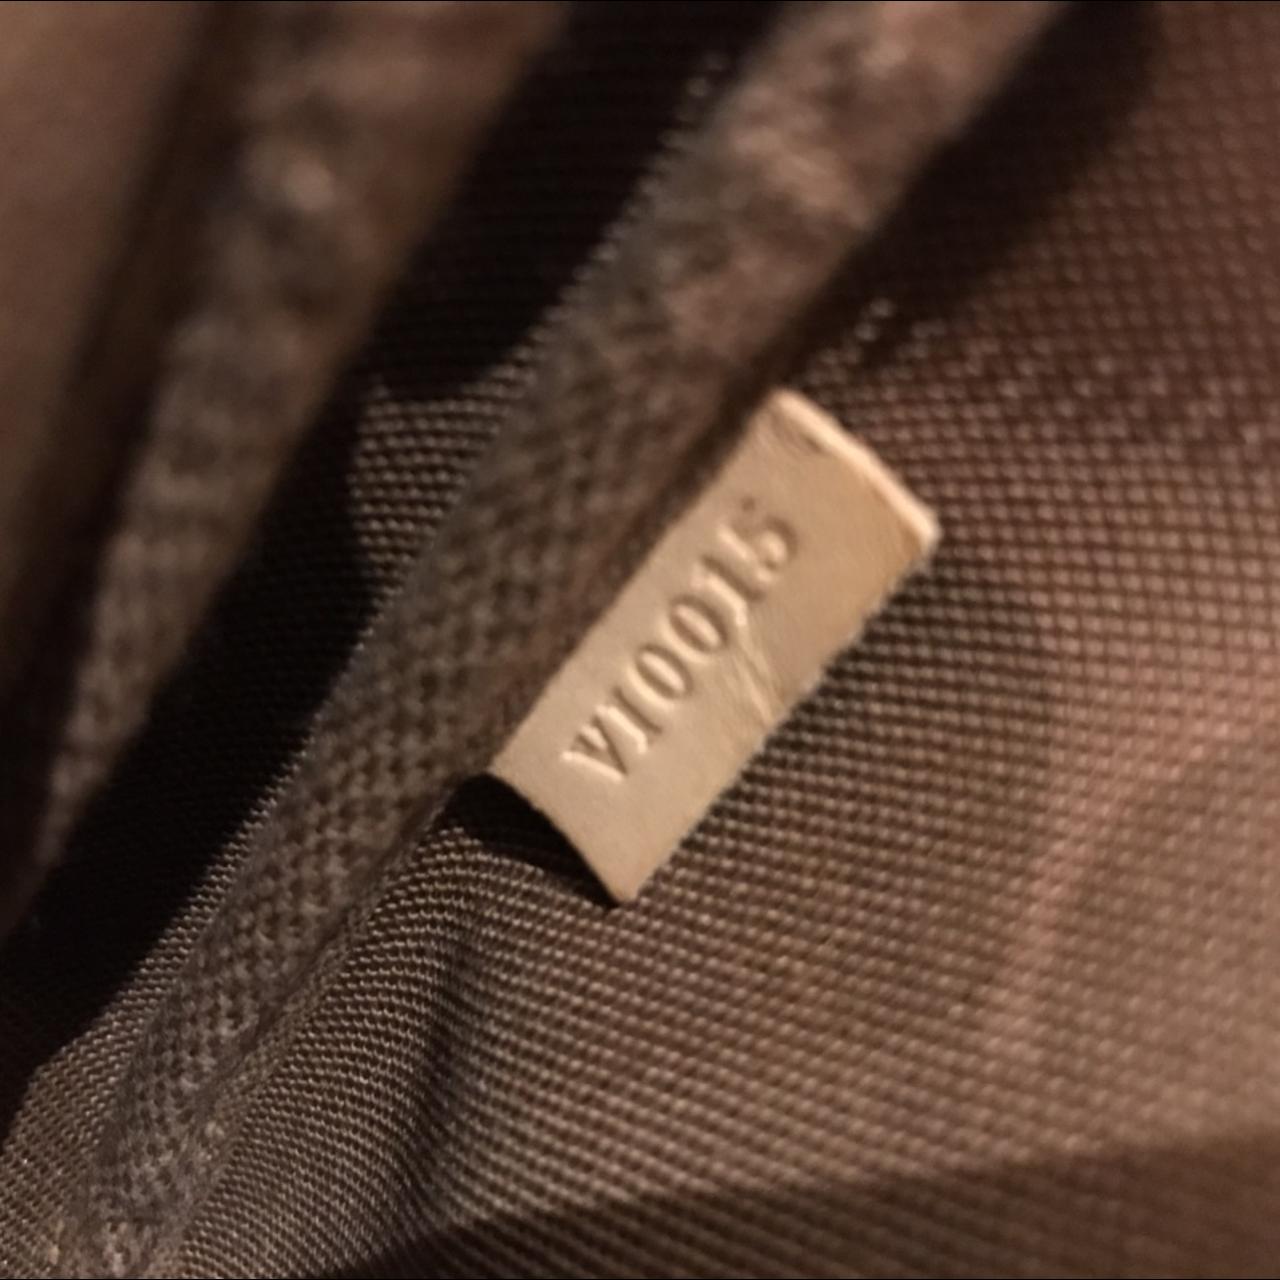 Louis Vuitton cherry pochette Discontinued limited - Depop